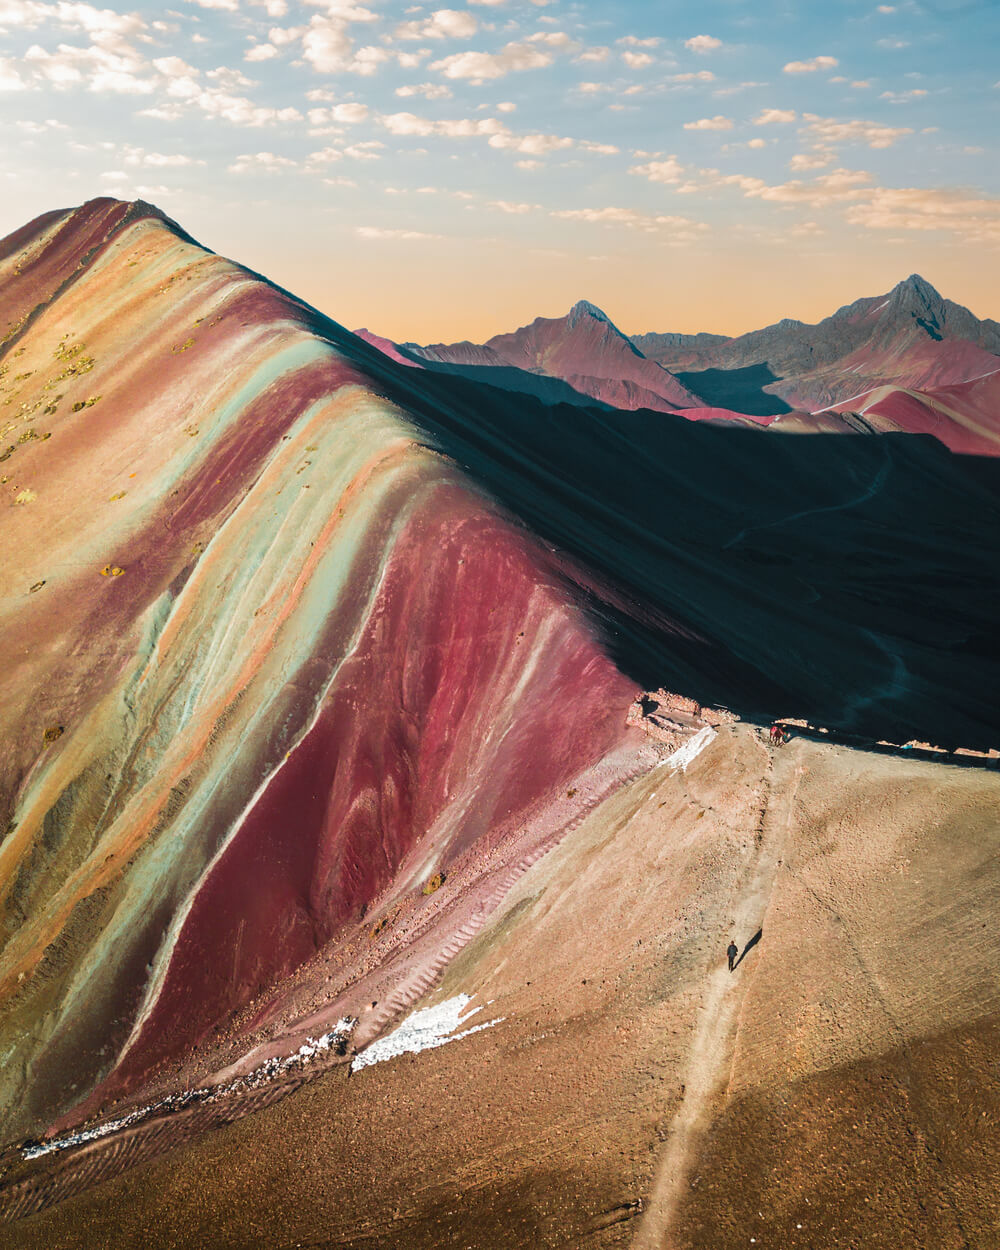 Photo of the Rainbow Mountain. Image by Jordan Hammond